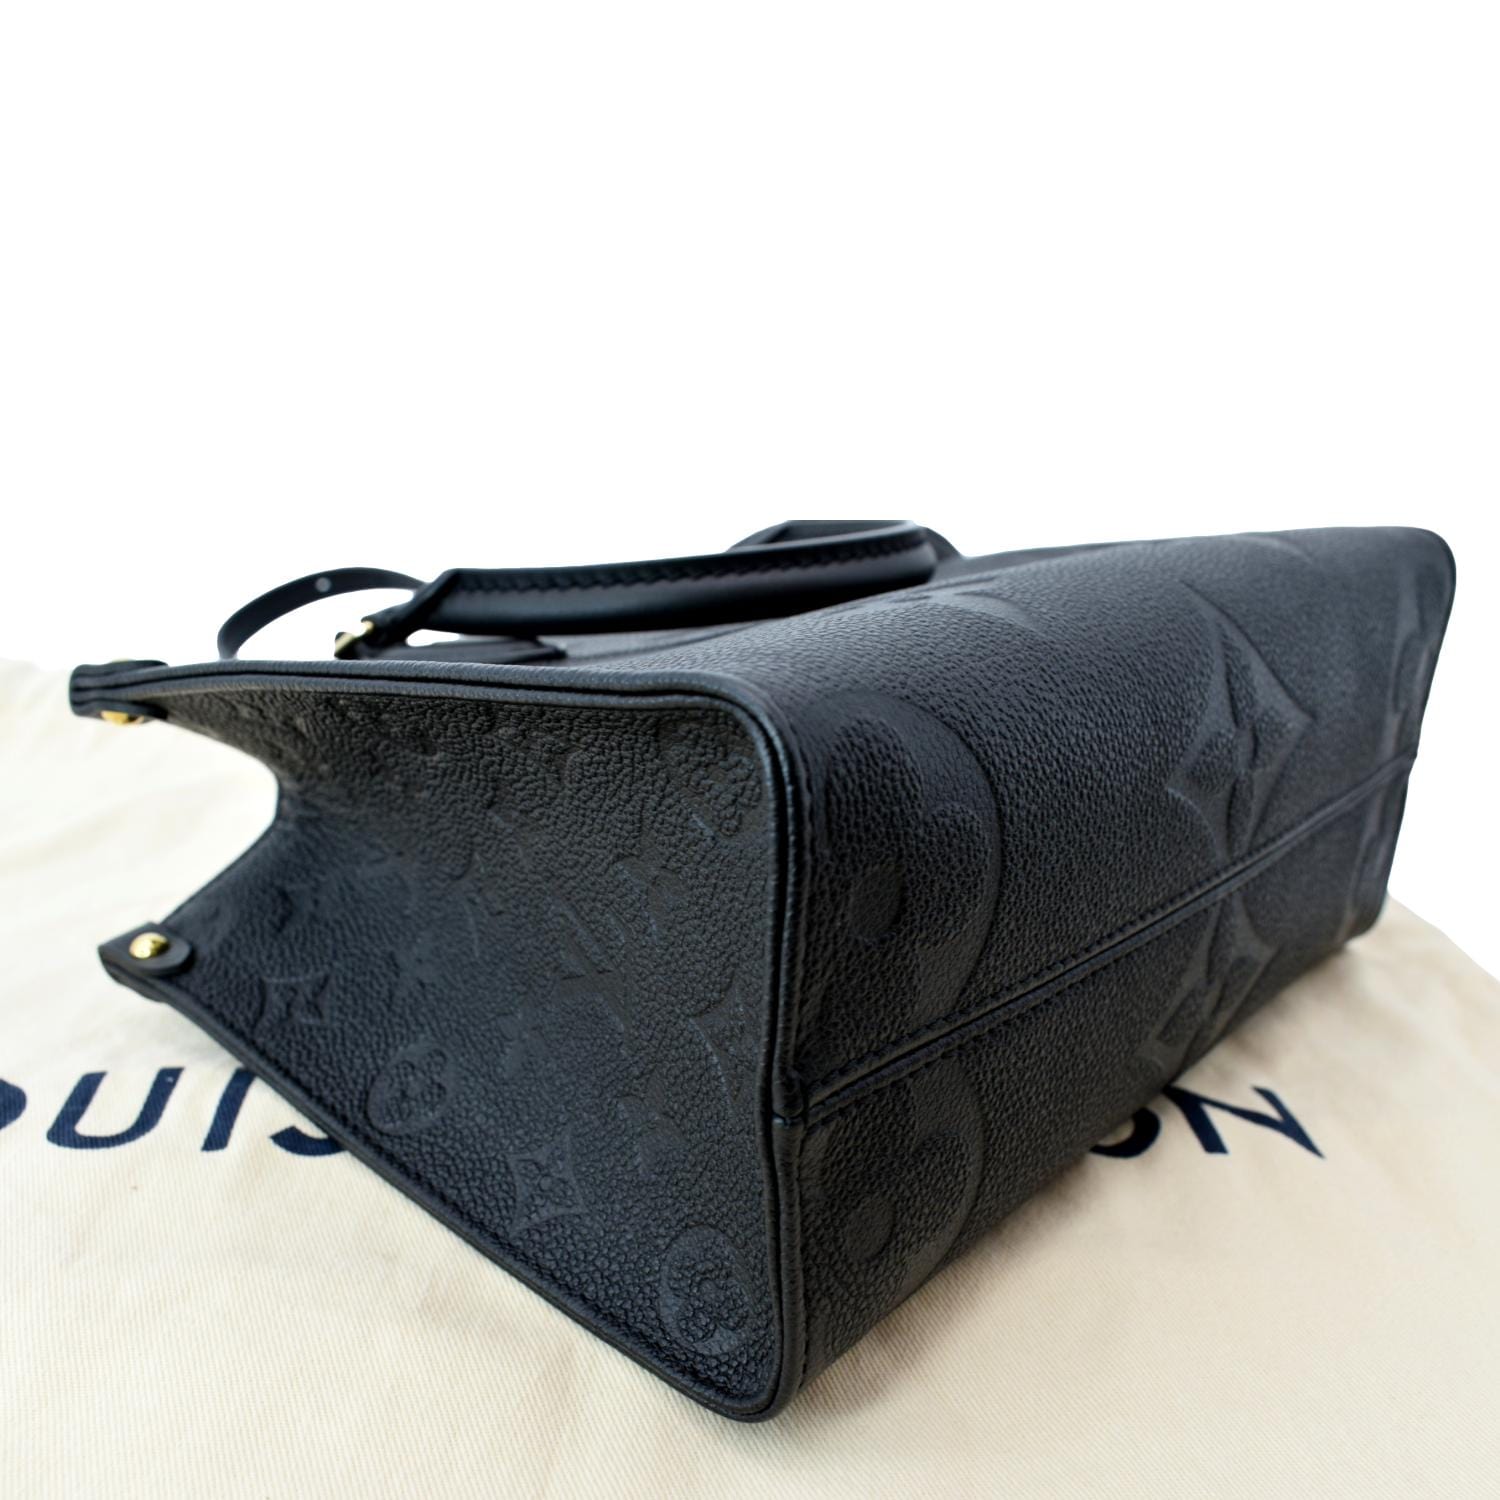 Louis Vuitton OnTheGo PM Bag In Black/Beige - Praise To Heaven